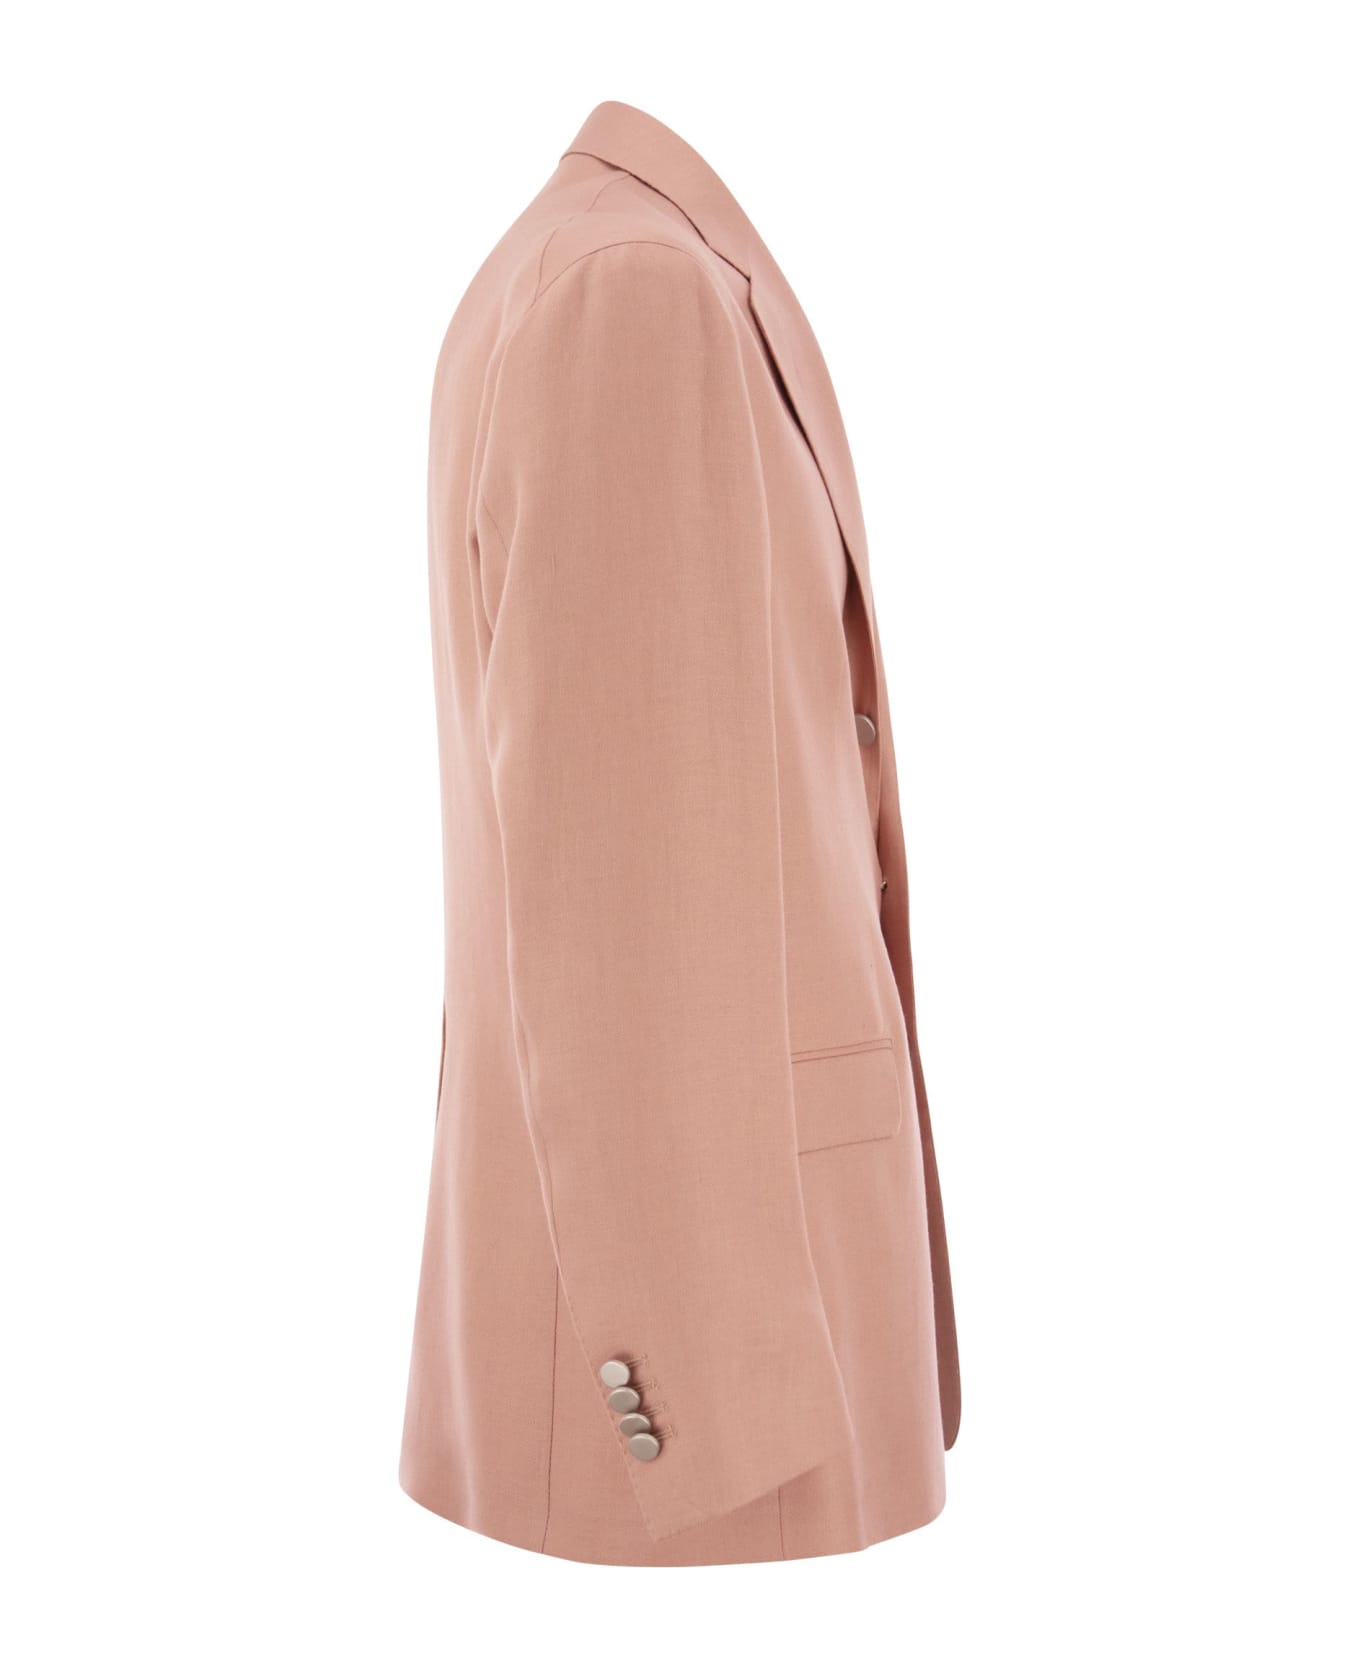 Tagliatore Two-button Wool Jacket - Pink スーツ